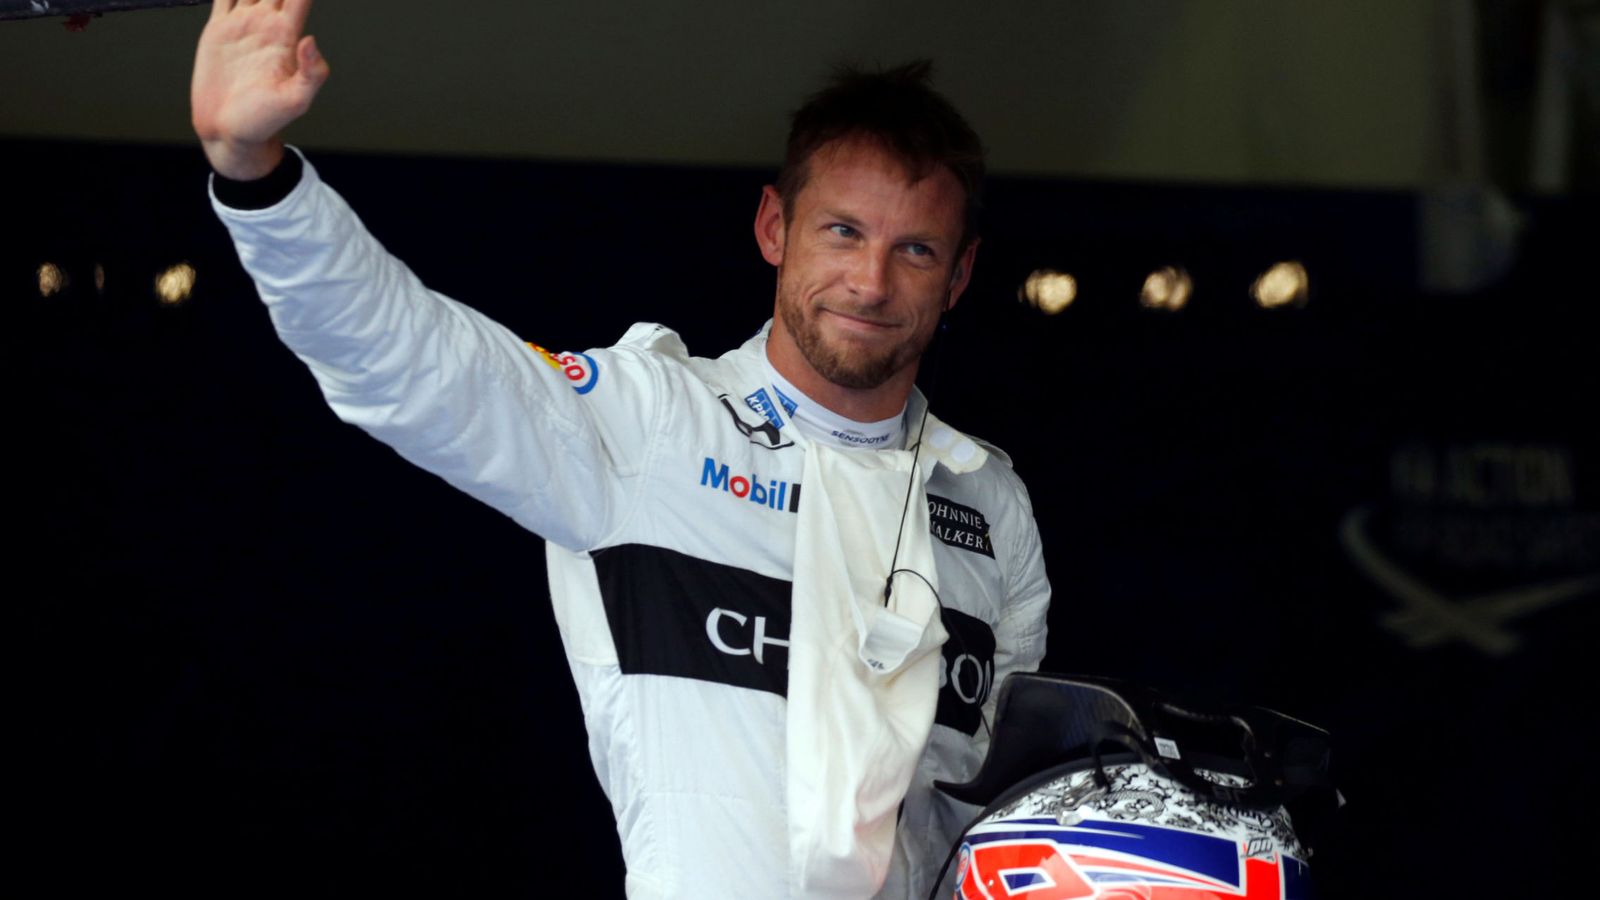 Foto: Jenson Button, piloto probador de McLaren y futuro piloto de rallycross, entre otras disciplinas.